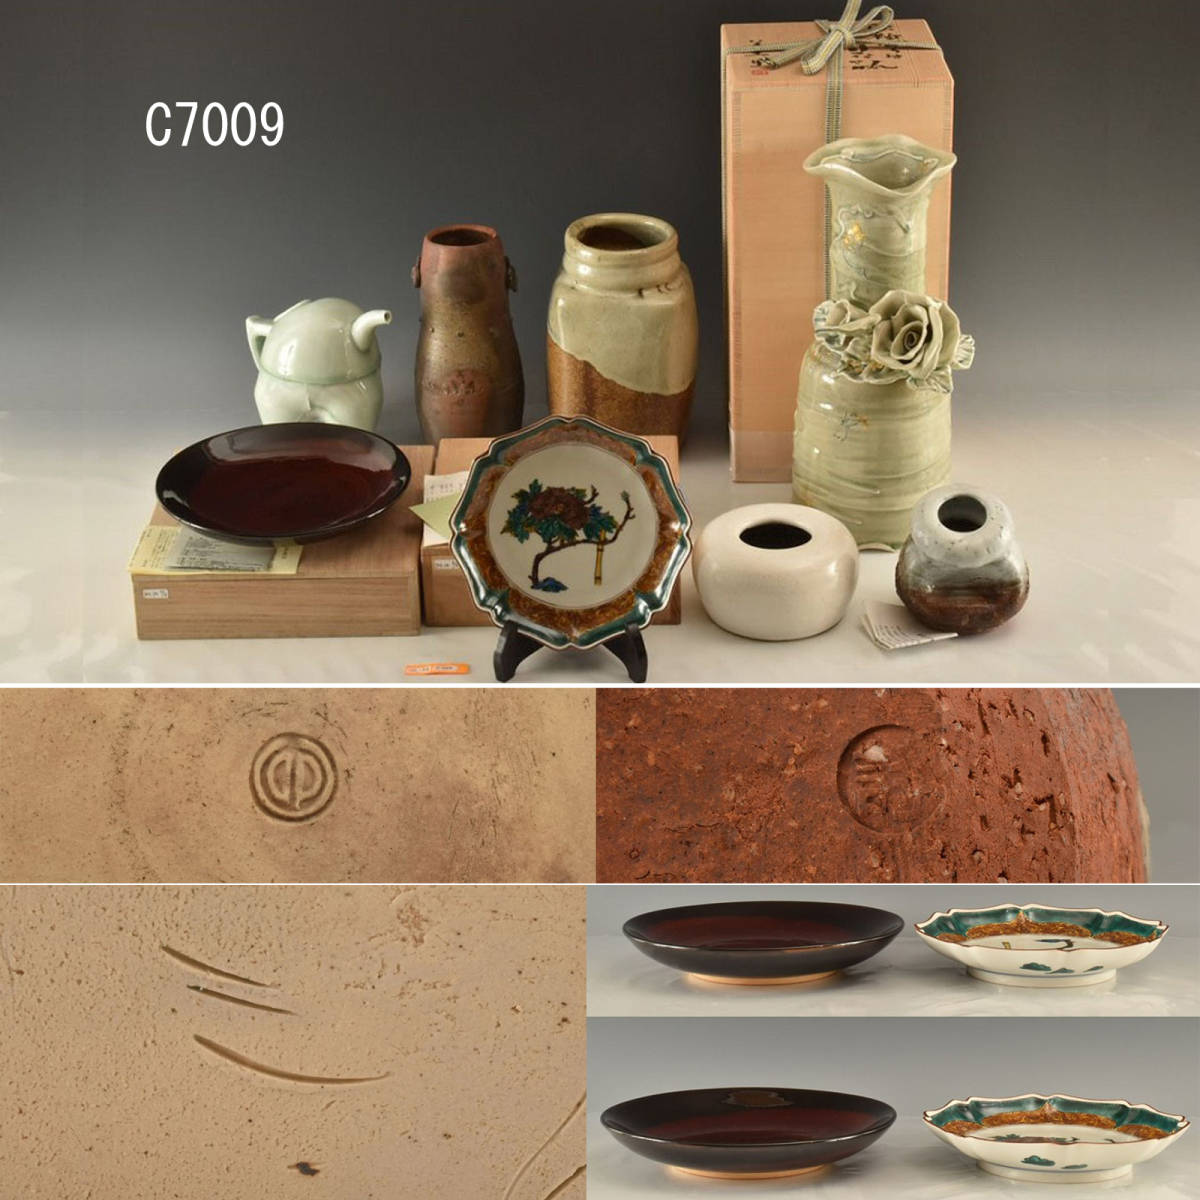 C07009 ваза 5* вода разница 1* тарелка 1* орнамент тарелка 1 всего 8 коробка : подлинный произведение 